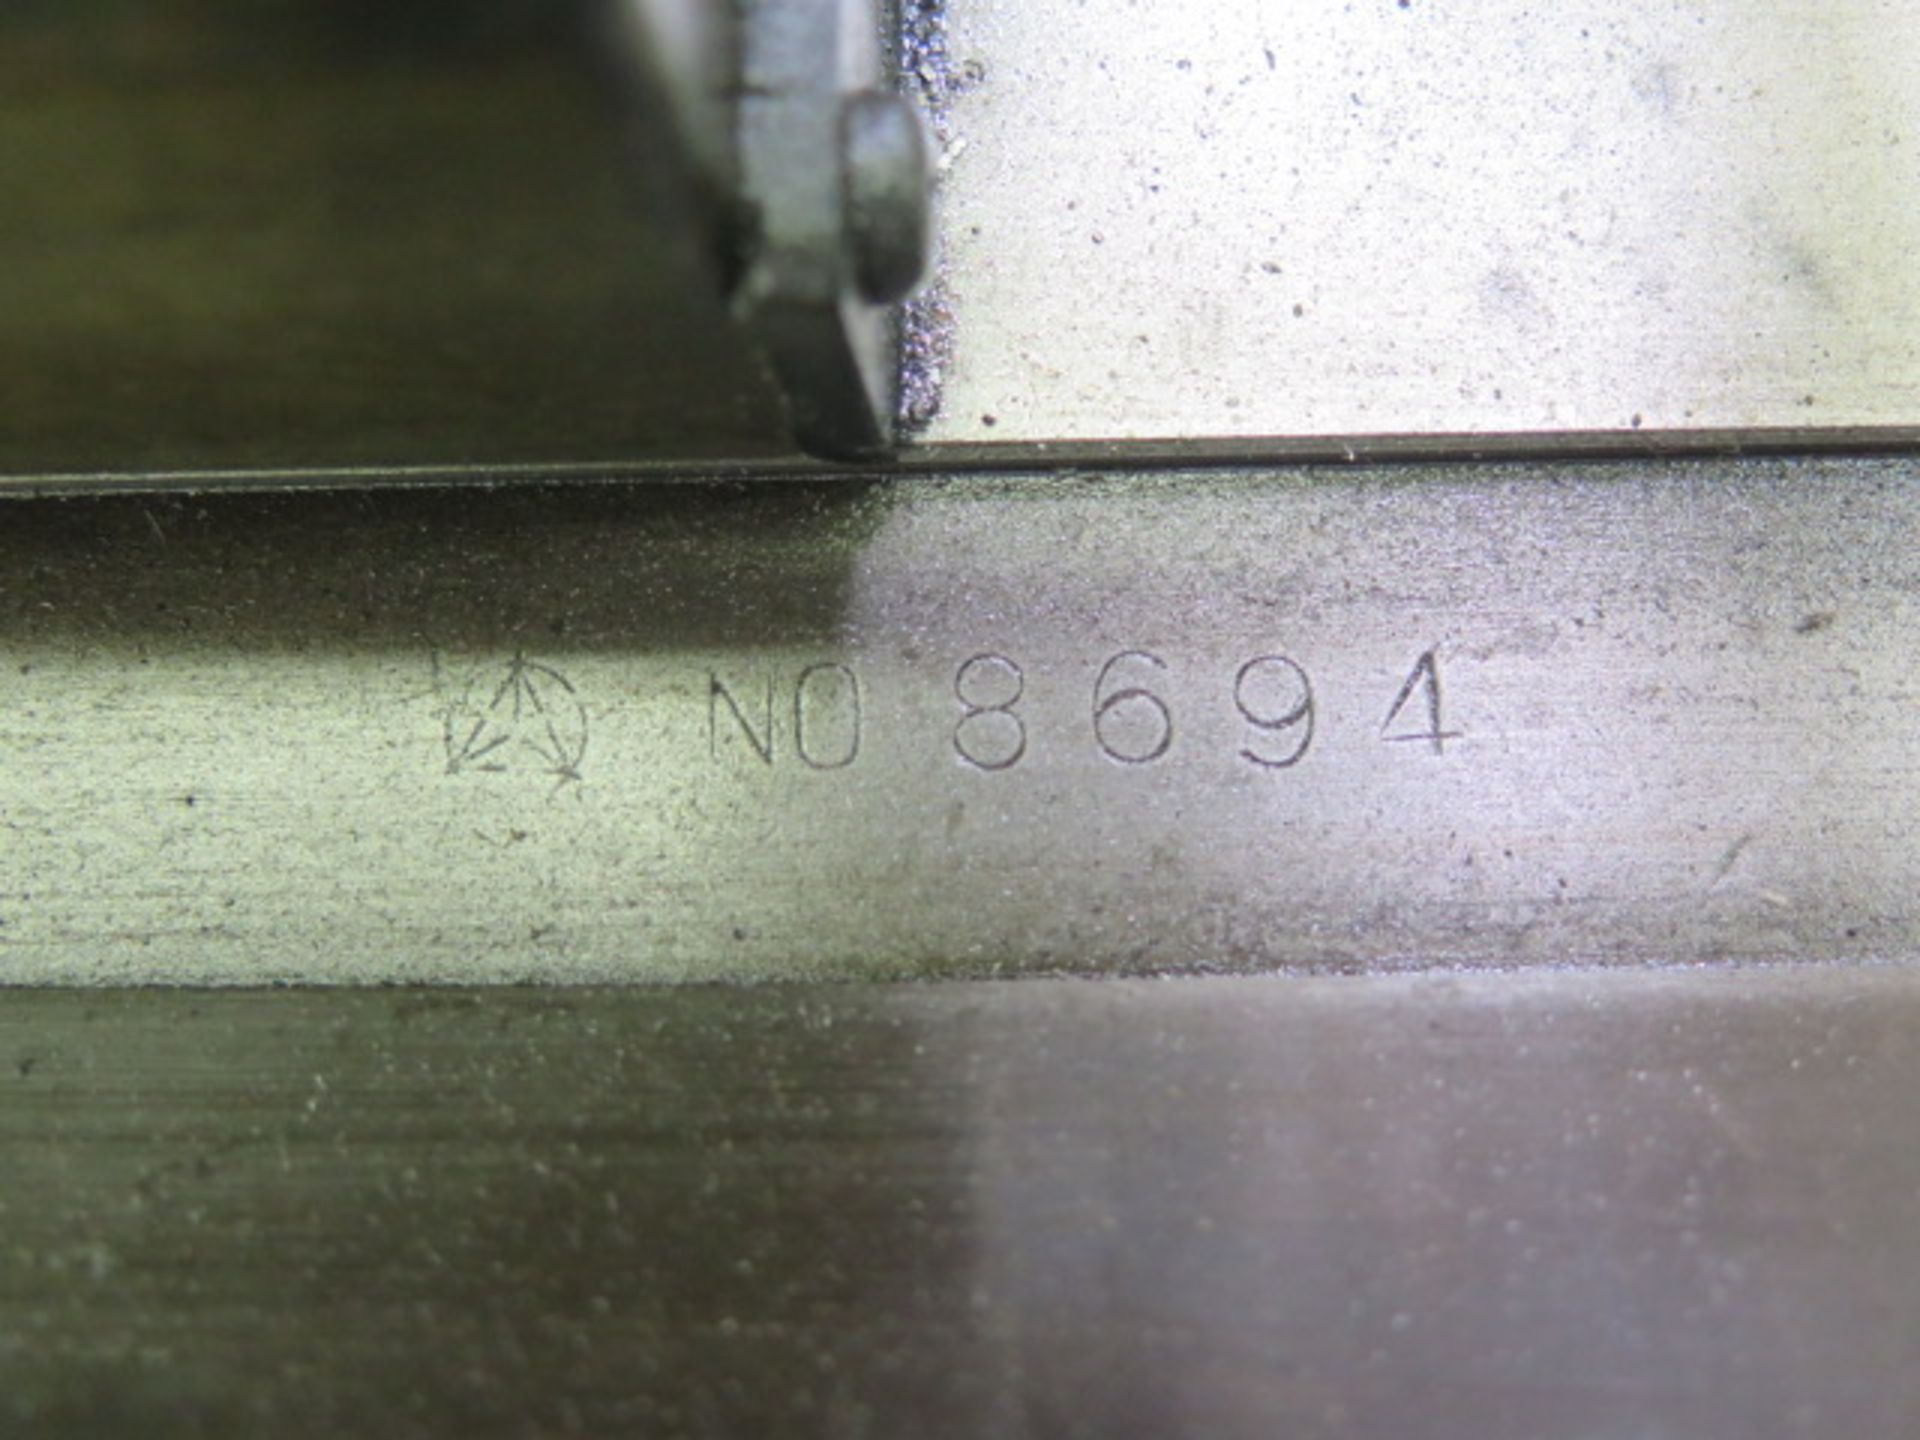 Mori Seiki MS-1250G 17” x 54” Geared Head Gap Bed Lathe s/n 8694 w/ Sargon Gold Tracer Lathe DRO, - Image 7 of 7